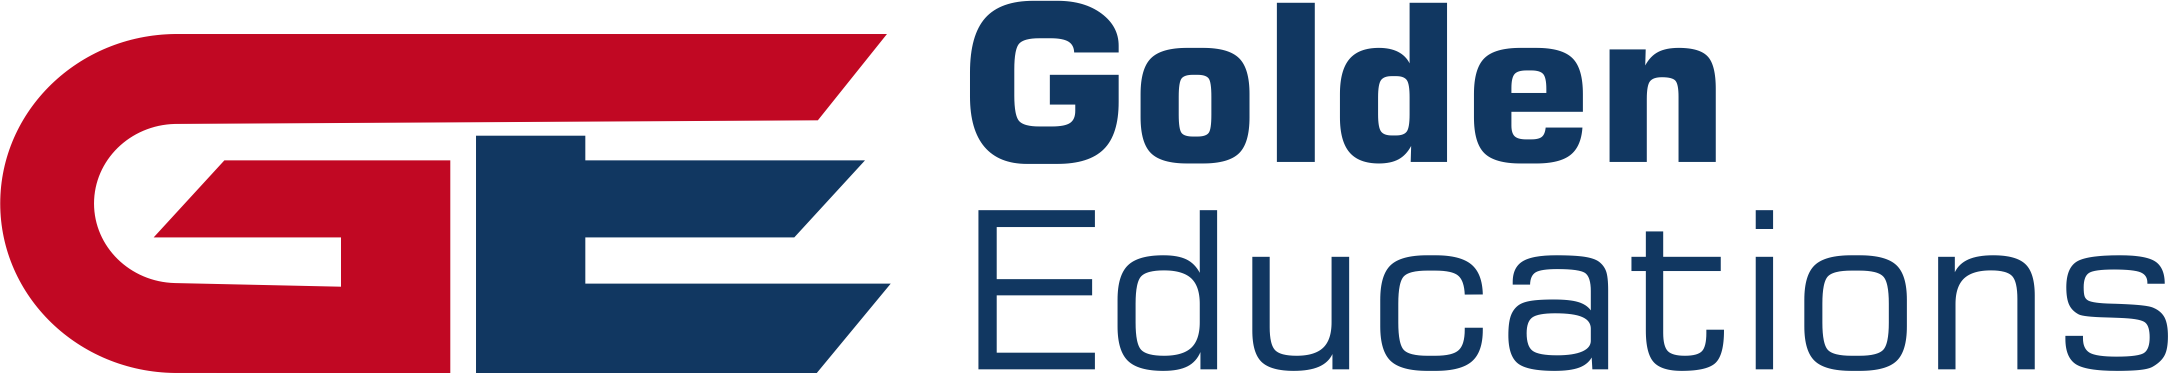 Golden Educations Logo